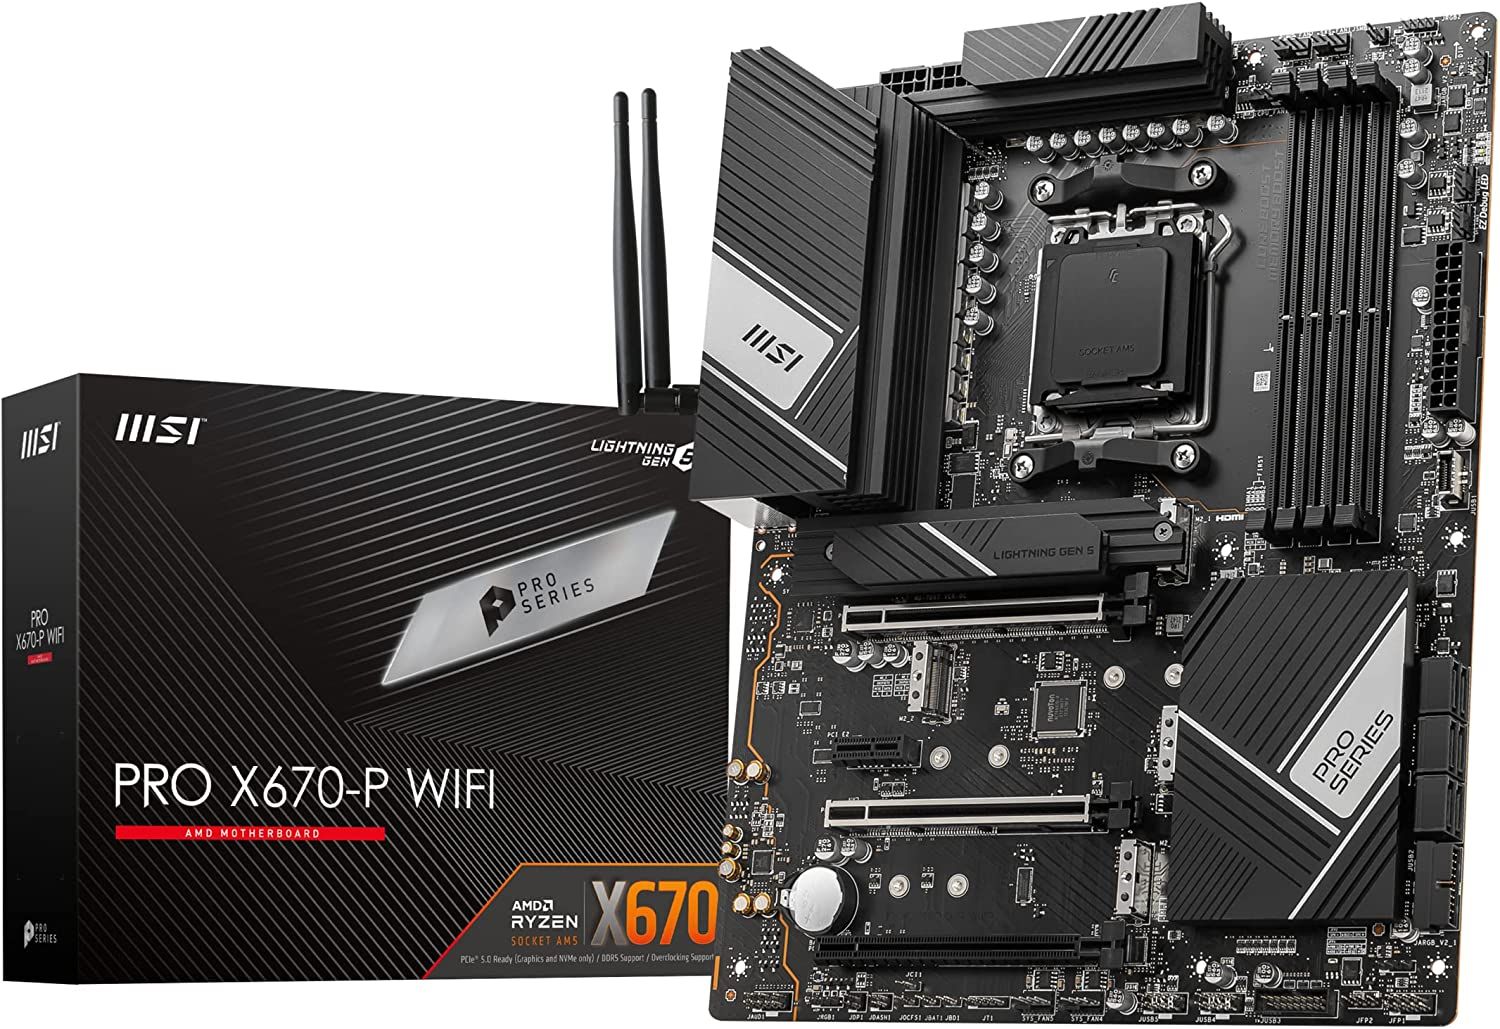 MSI PRO X670-P WiFi Pro Series Motherboard